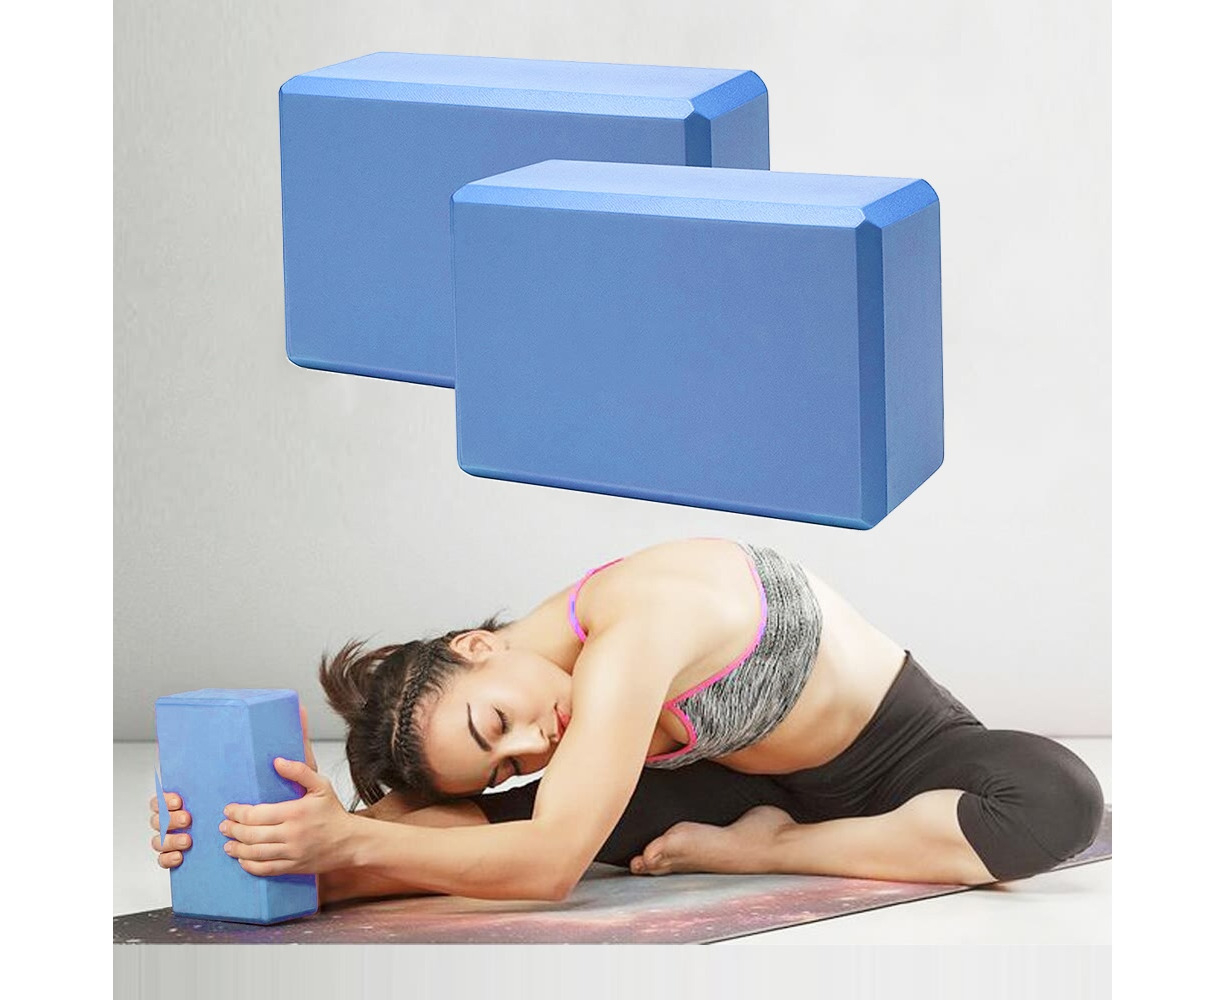 Yoga Brick Solves